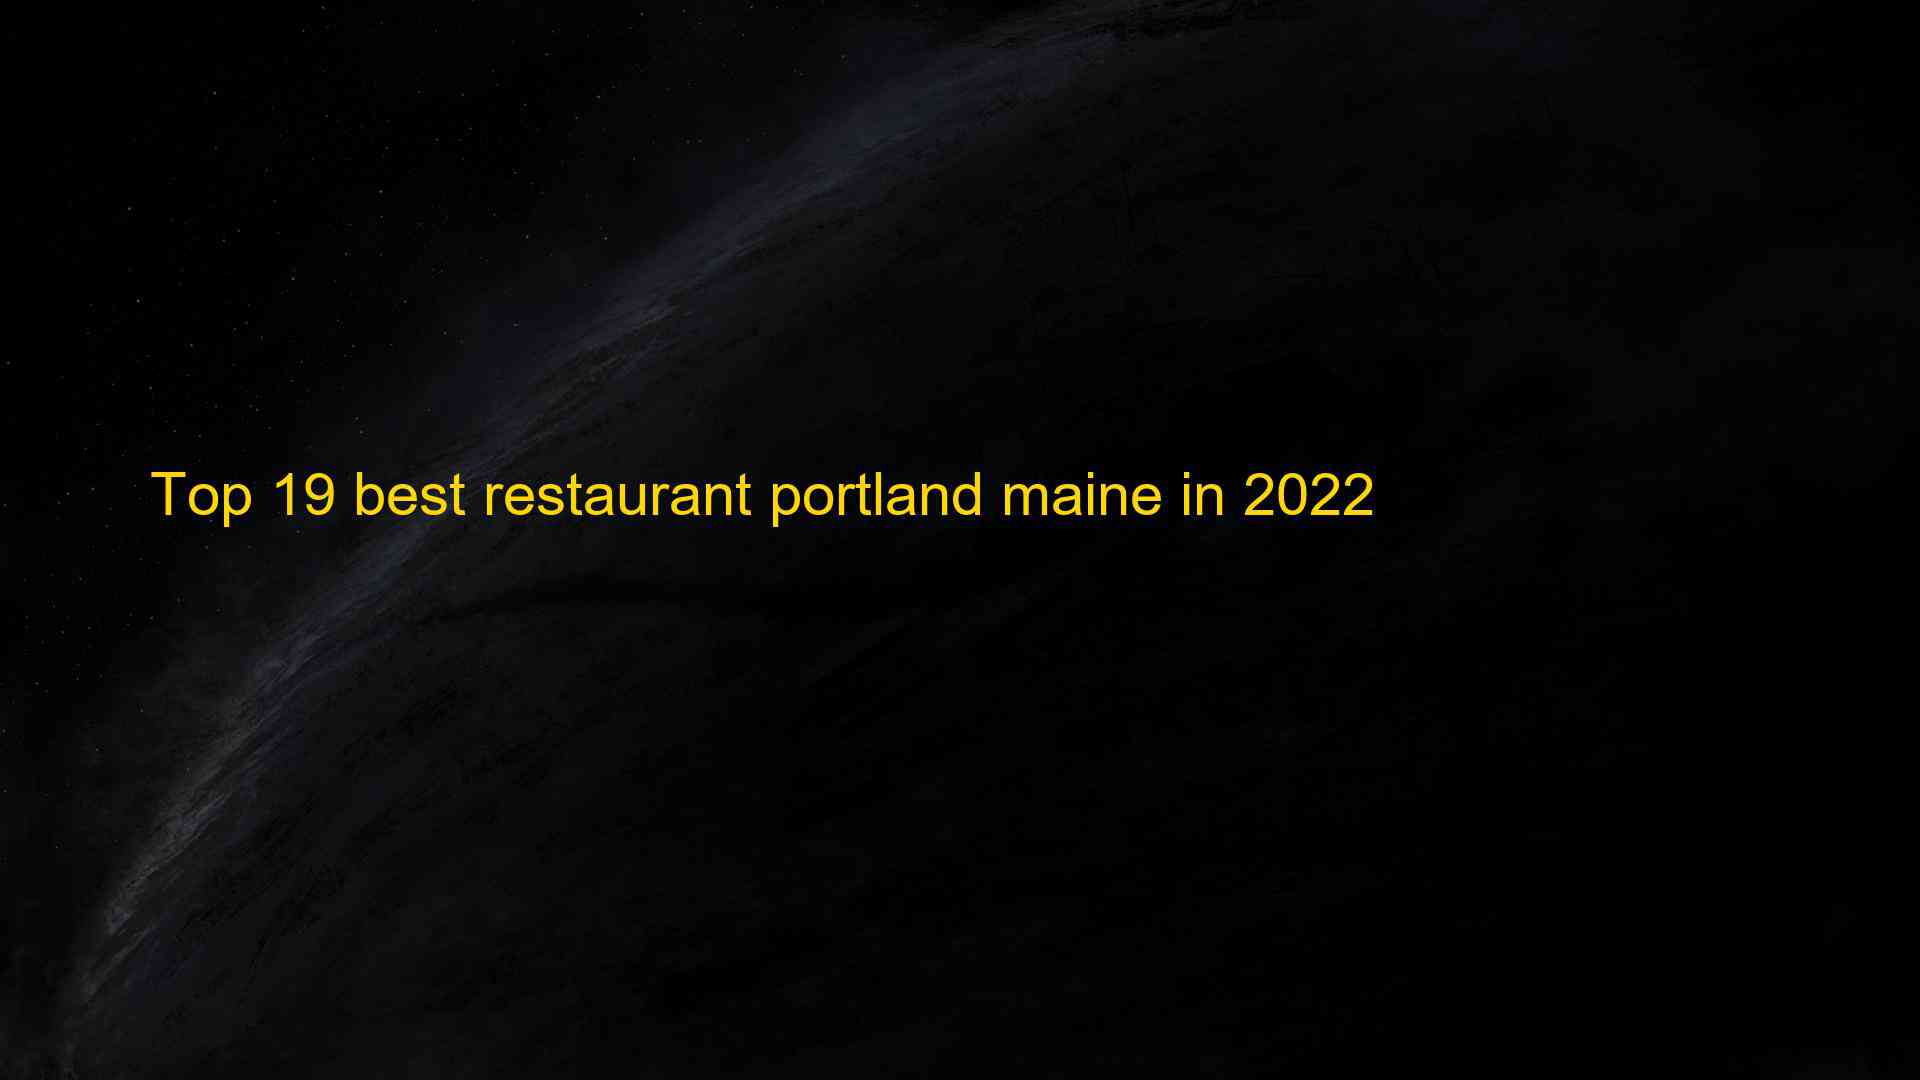 Top 19 best restaurant portland maine in 2022 1662837820